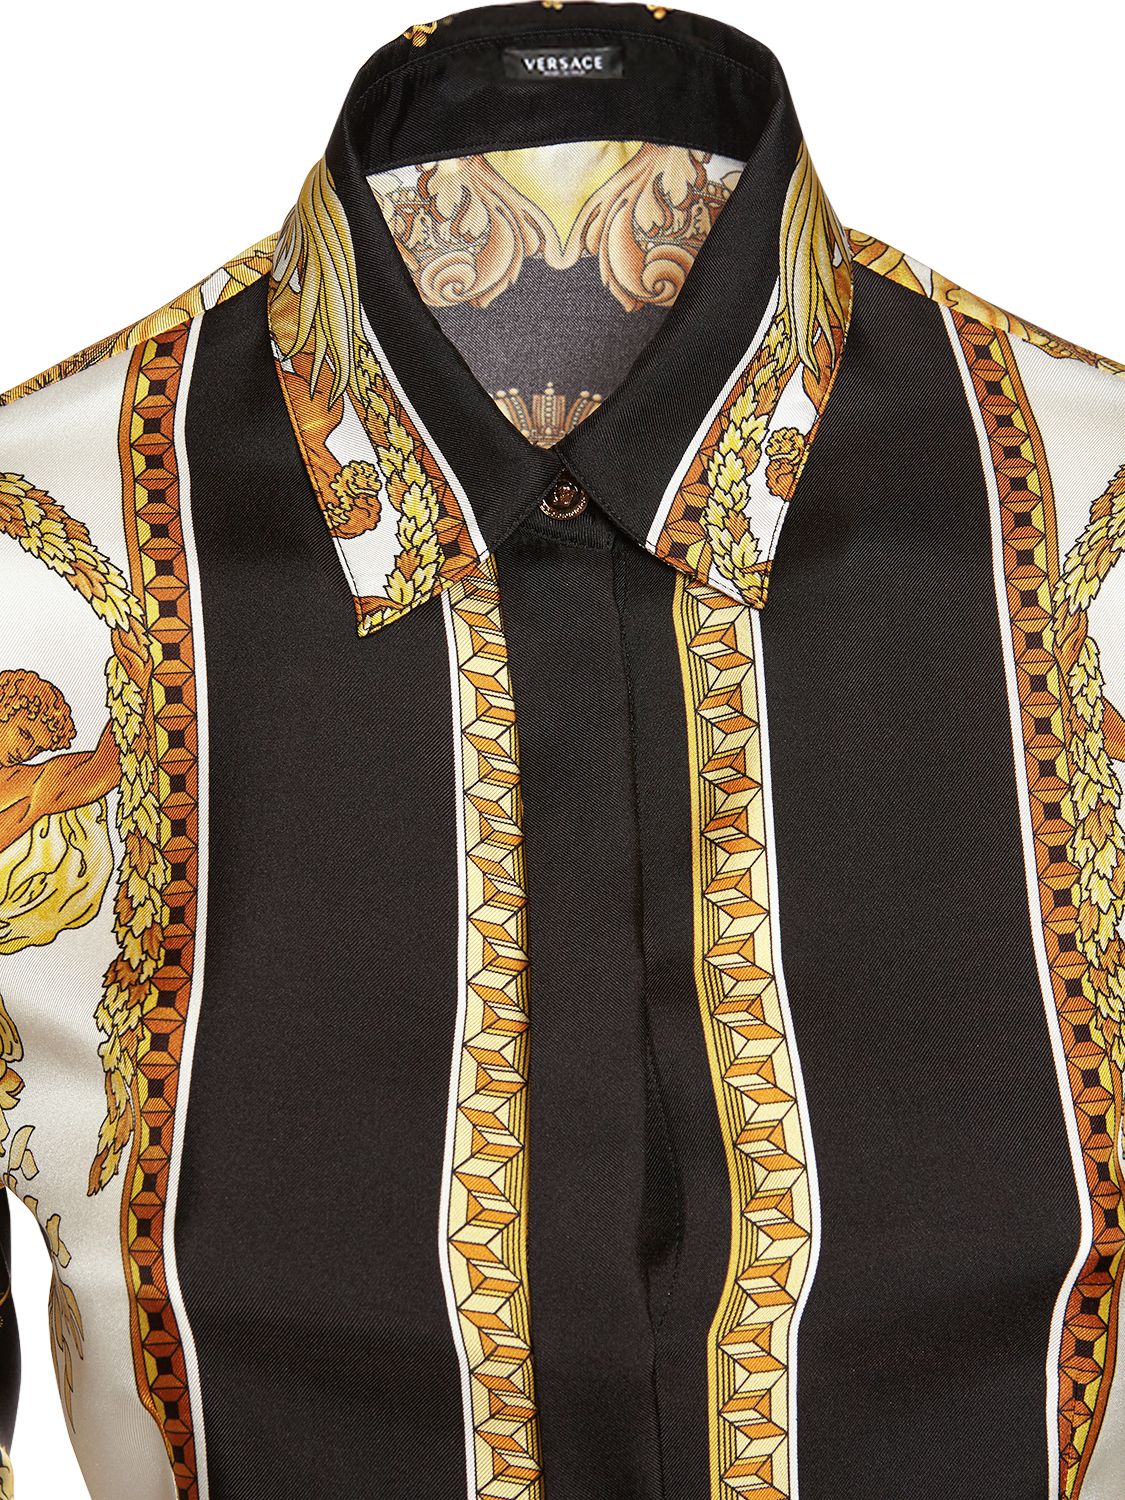 Versace Black And Gold Medusa Renaissance Silk Shirt In 5b070 Black Gold